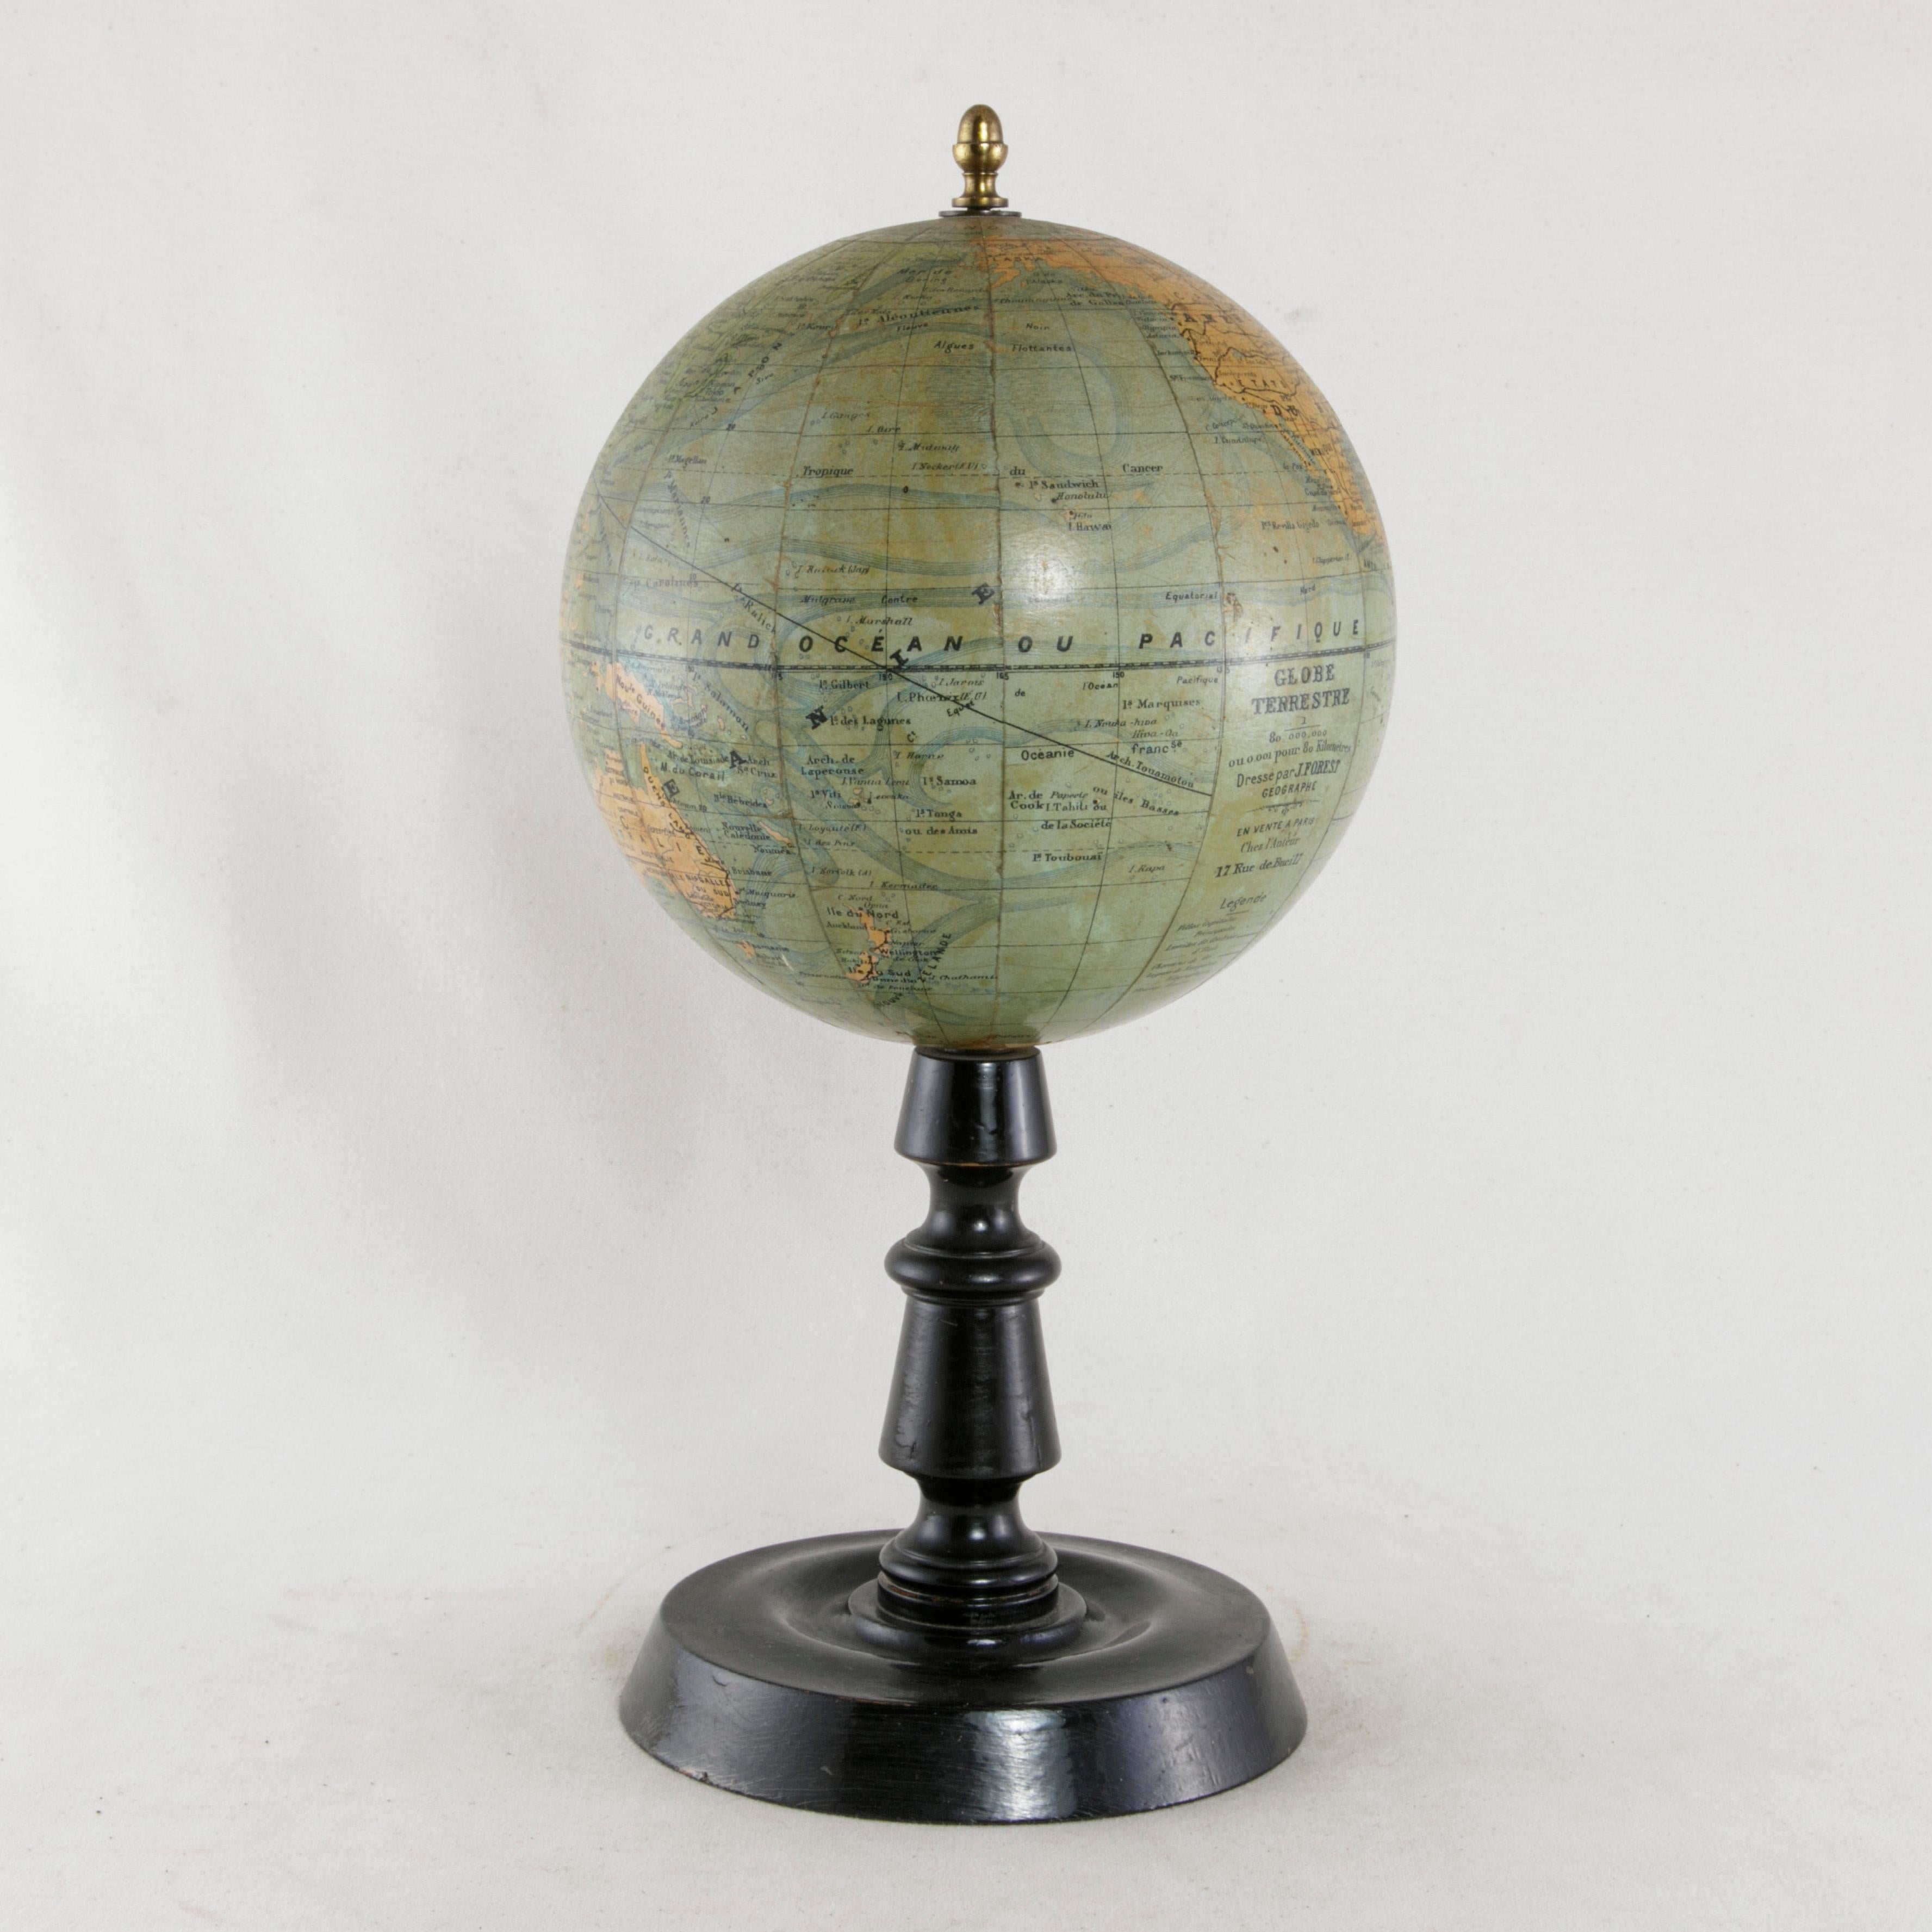 French Terrestrial Globe on Ebonized Wood Base by Cartographer J. Forest 1